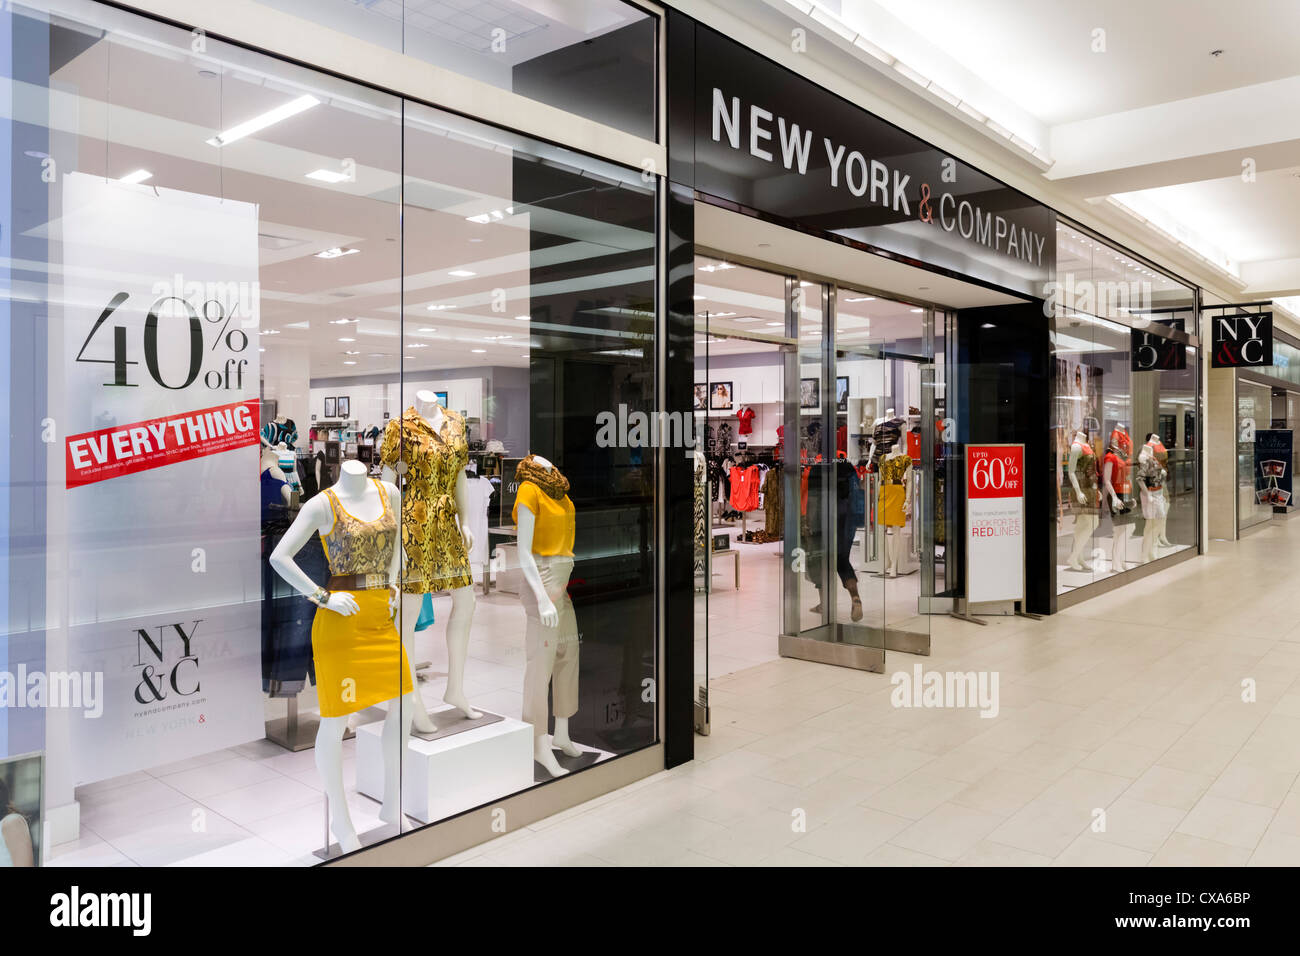 New York & Company store in the Mall of America, Bloomington, Minneapolis, Minnesota, USA Stock Photo